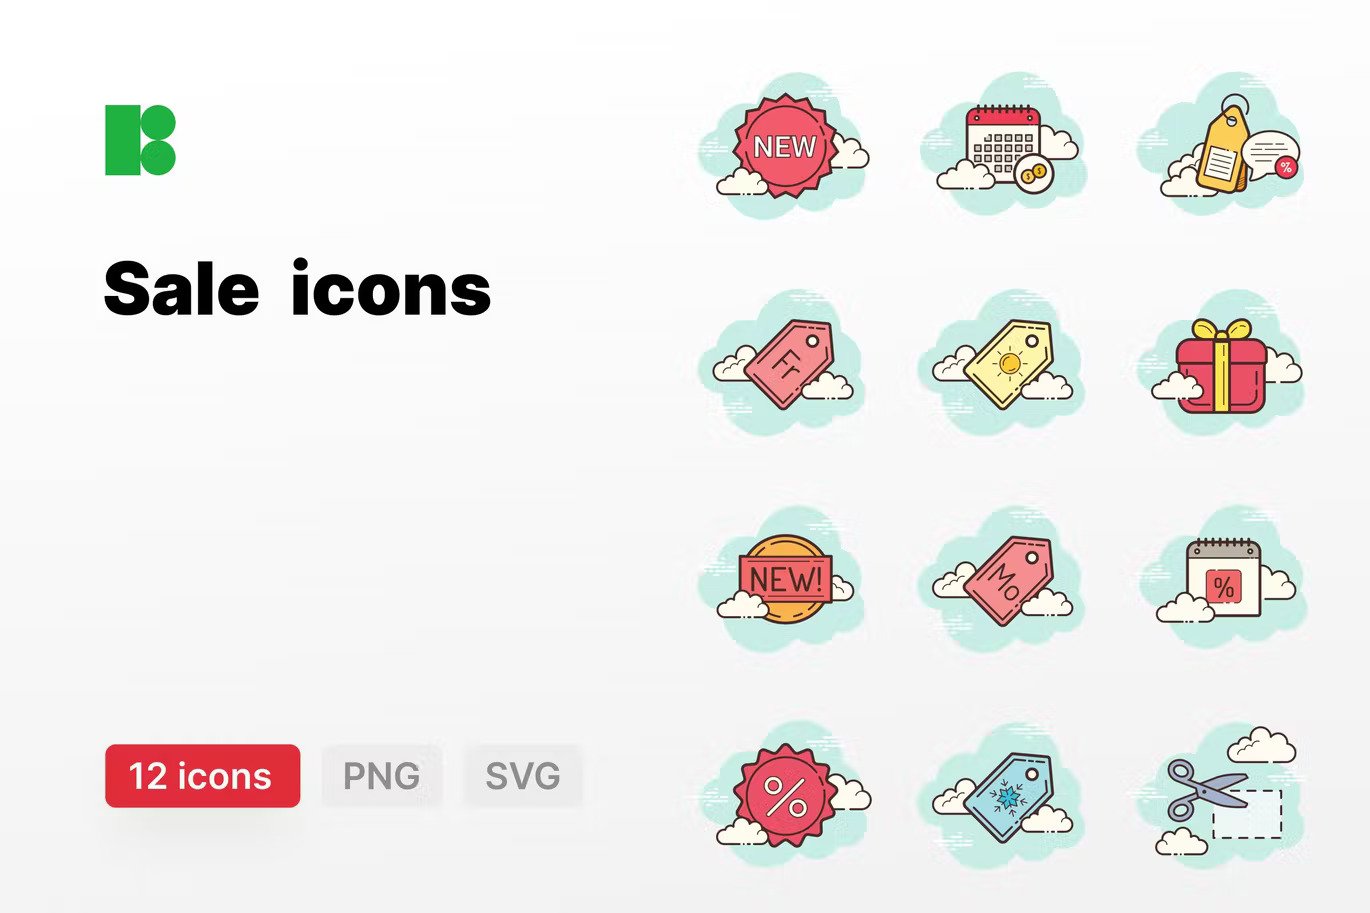 Beautiful sale icons